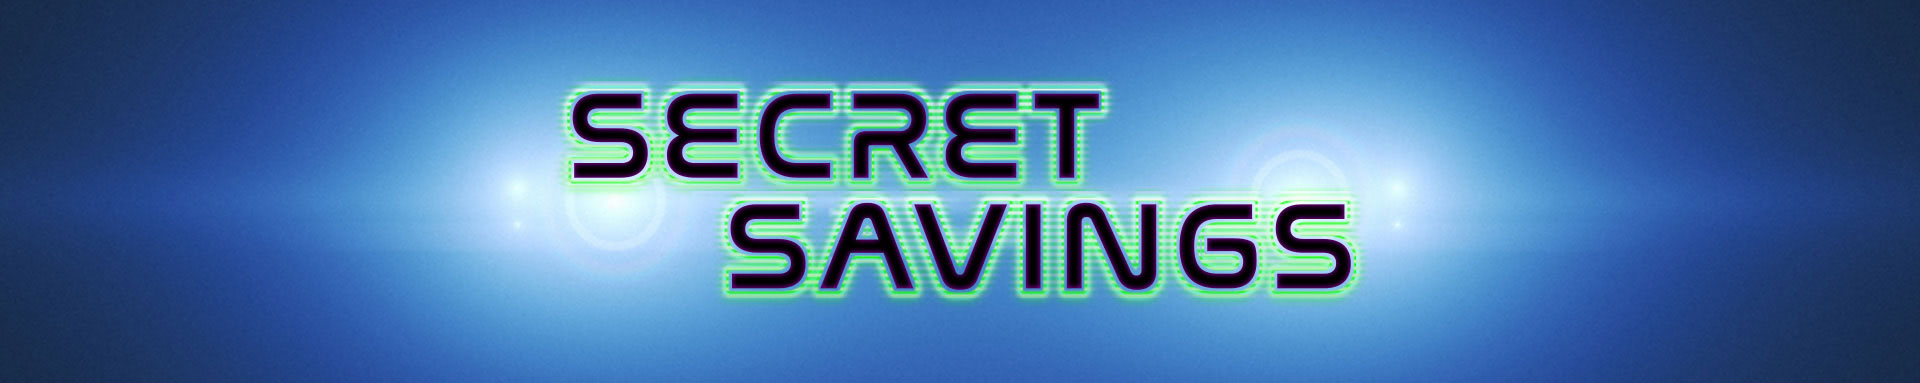 SECRET SAVINGS